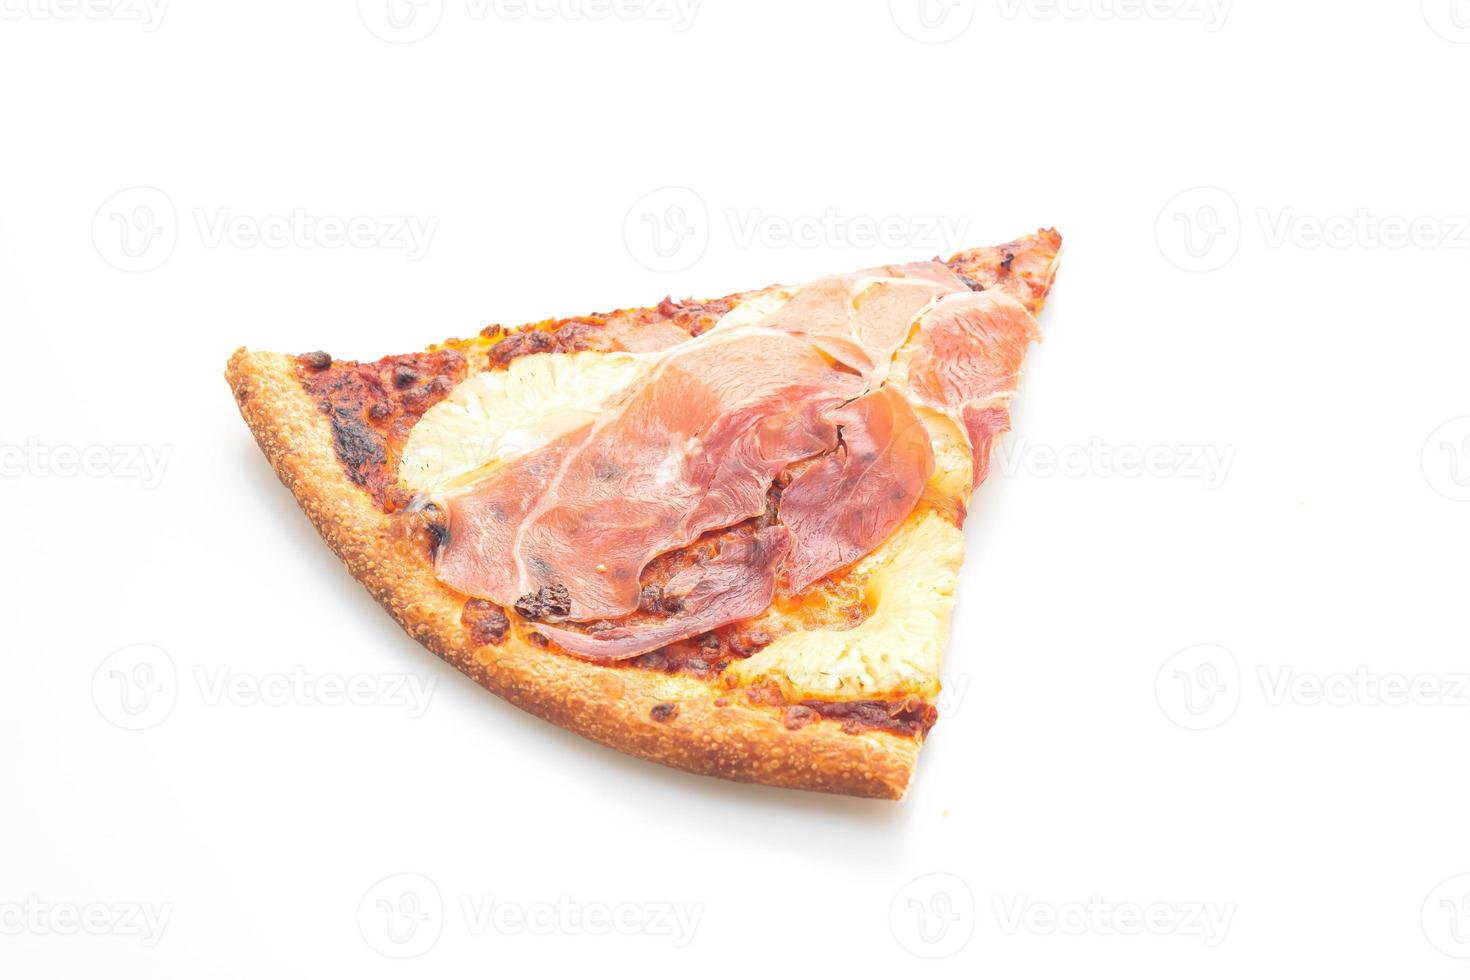 pizza med prosciutto eller parmaskinka pizza på vit bakgrund foto